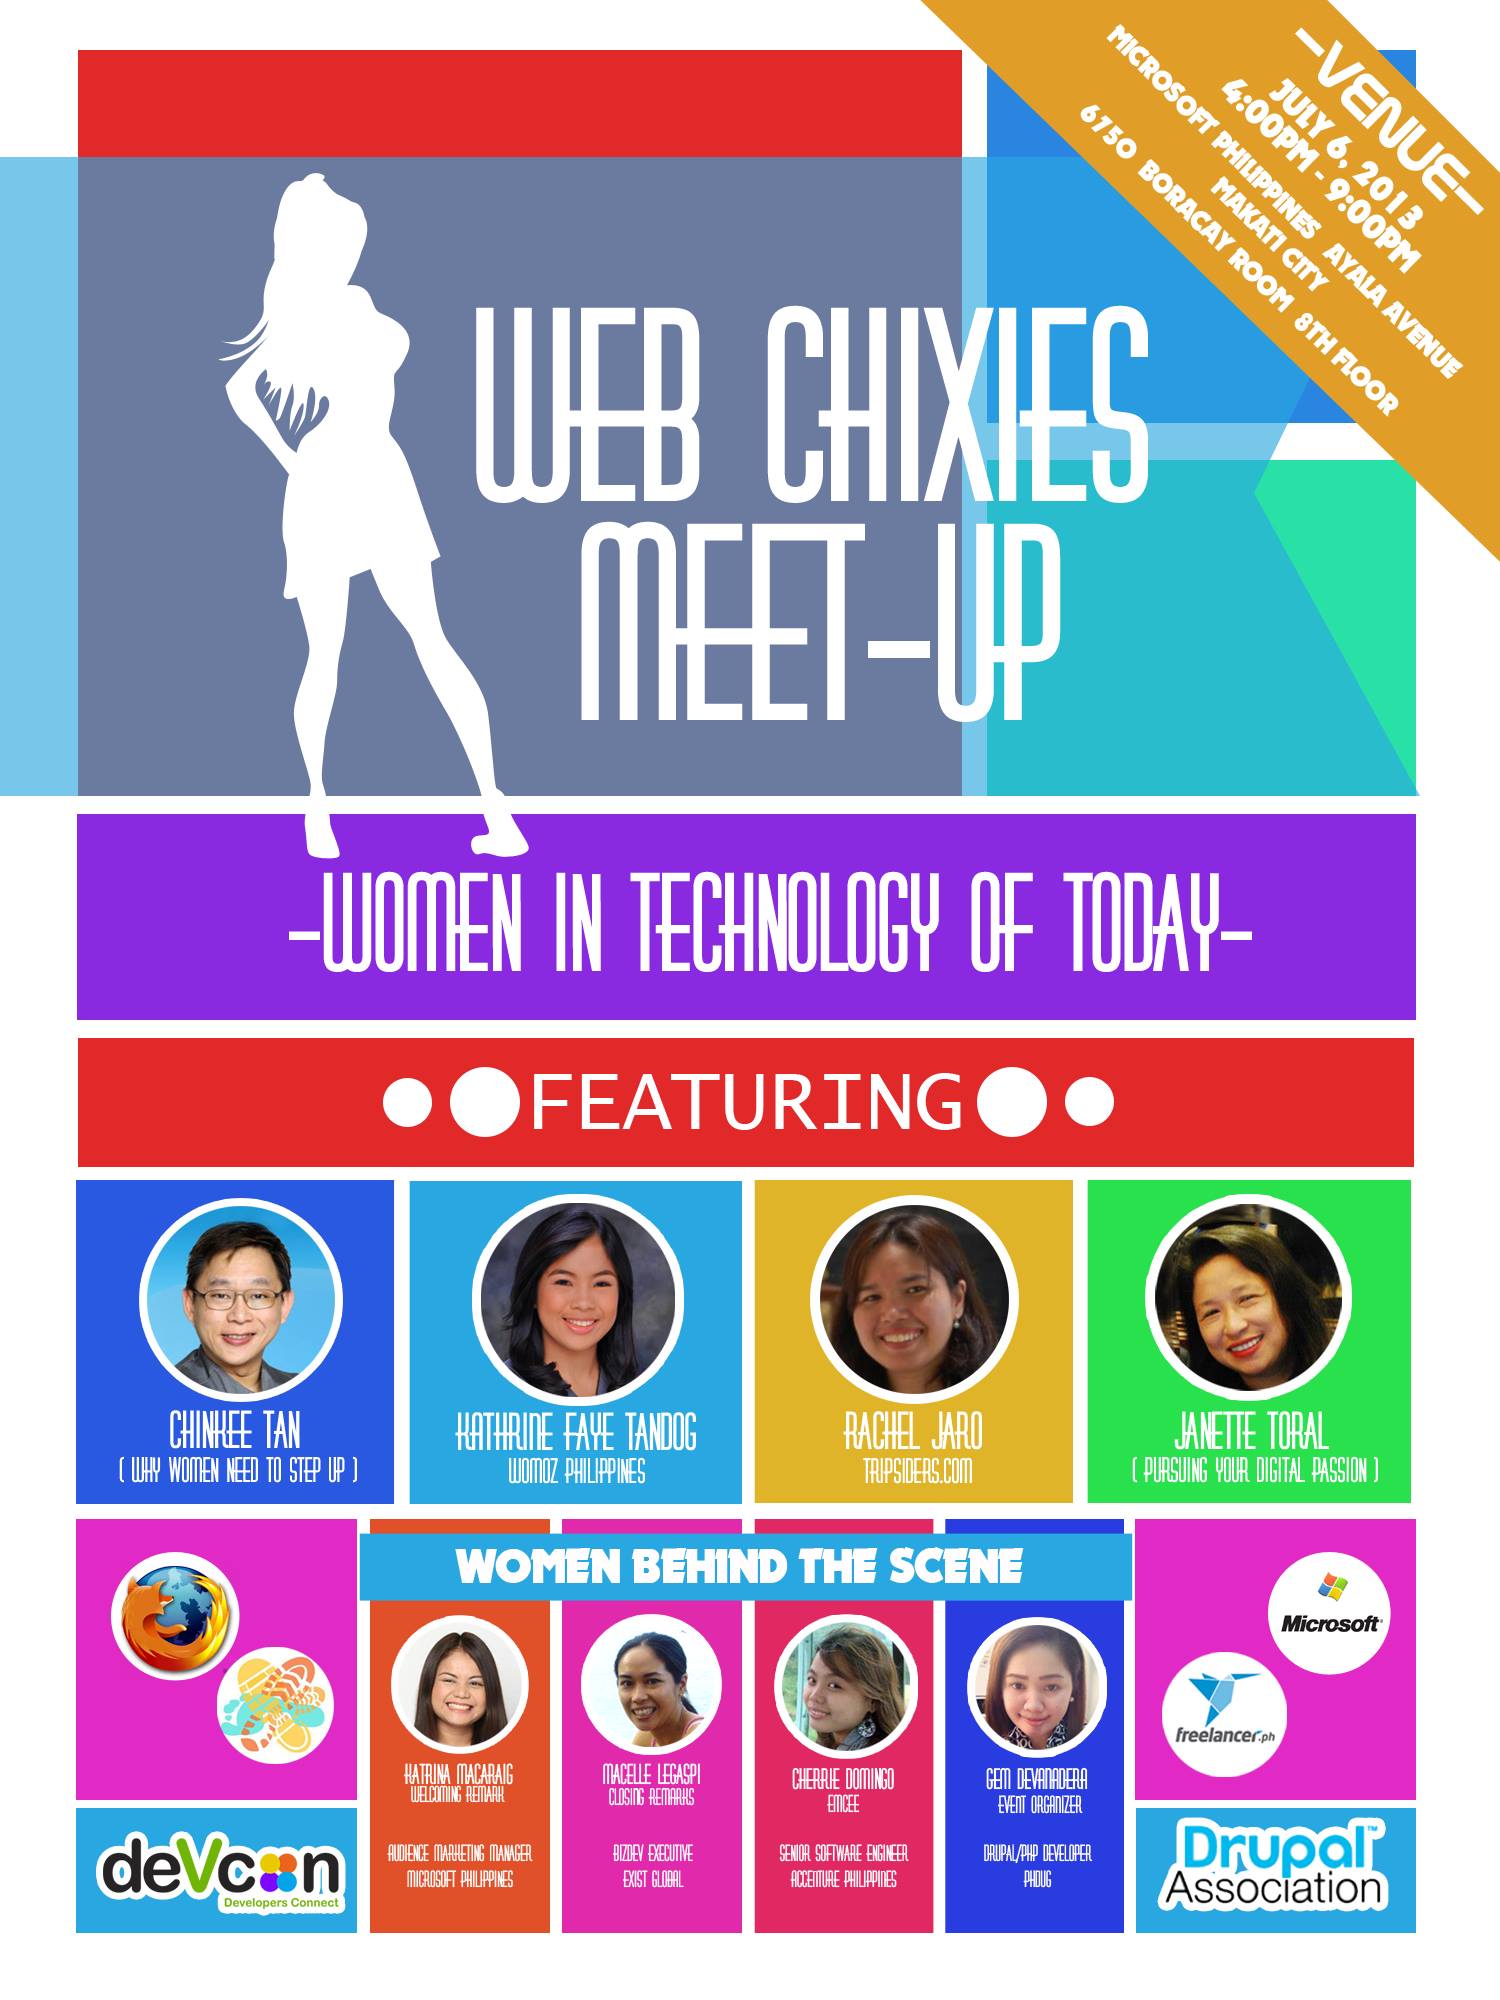 Mozilla Philippines Supports Web Chixies Meetup